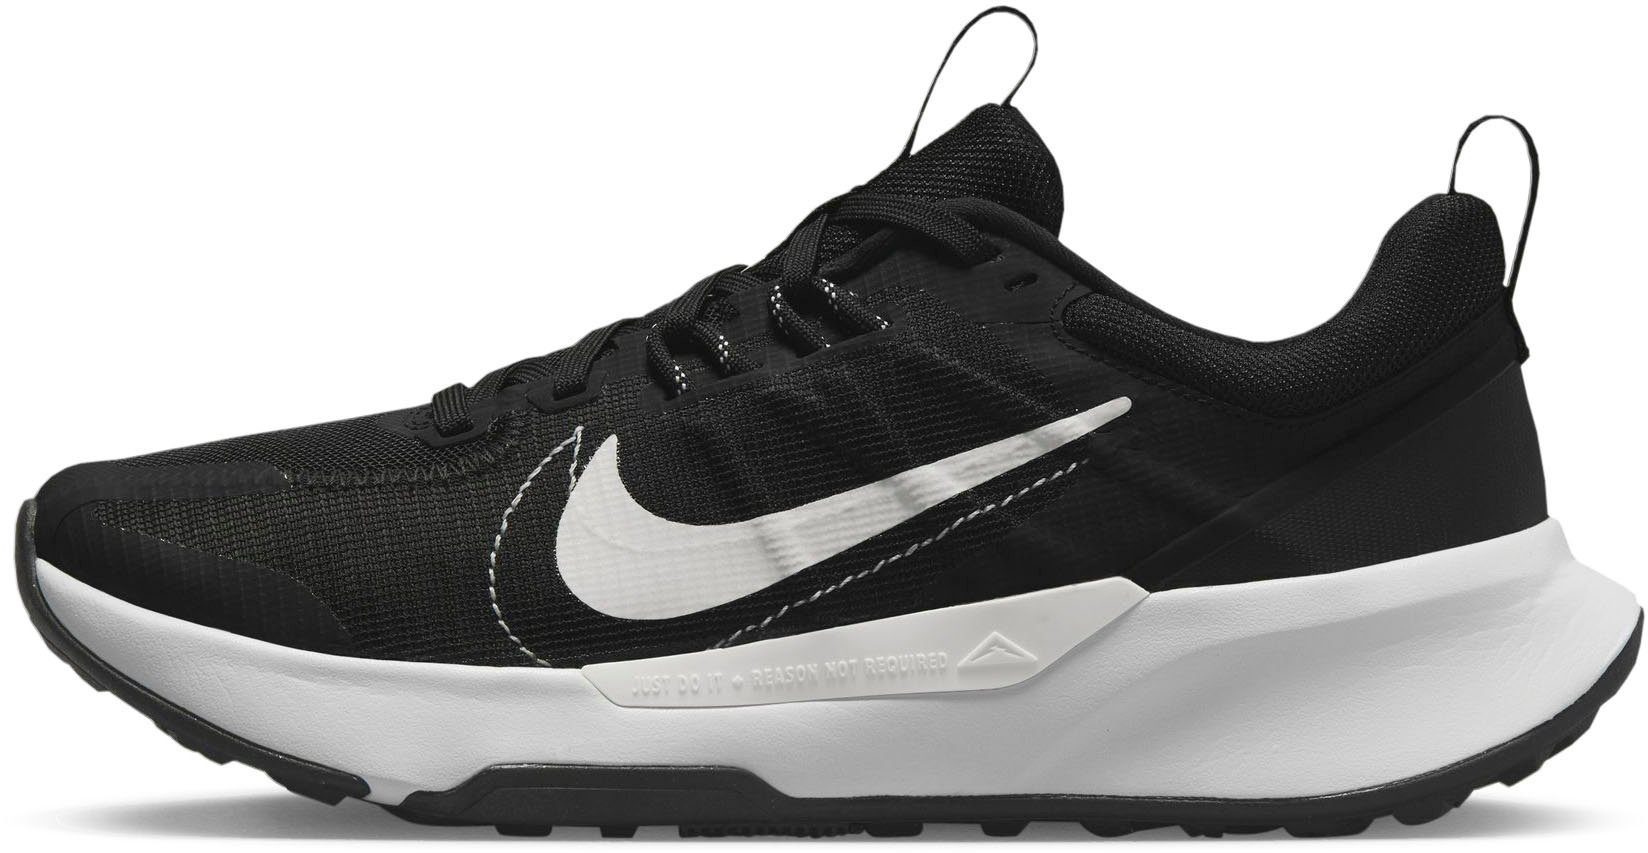 Nike schwarz-weiß Trailrunningschuh TRAIL 2 TRAIL JUNIPER